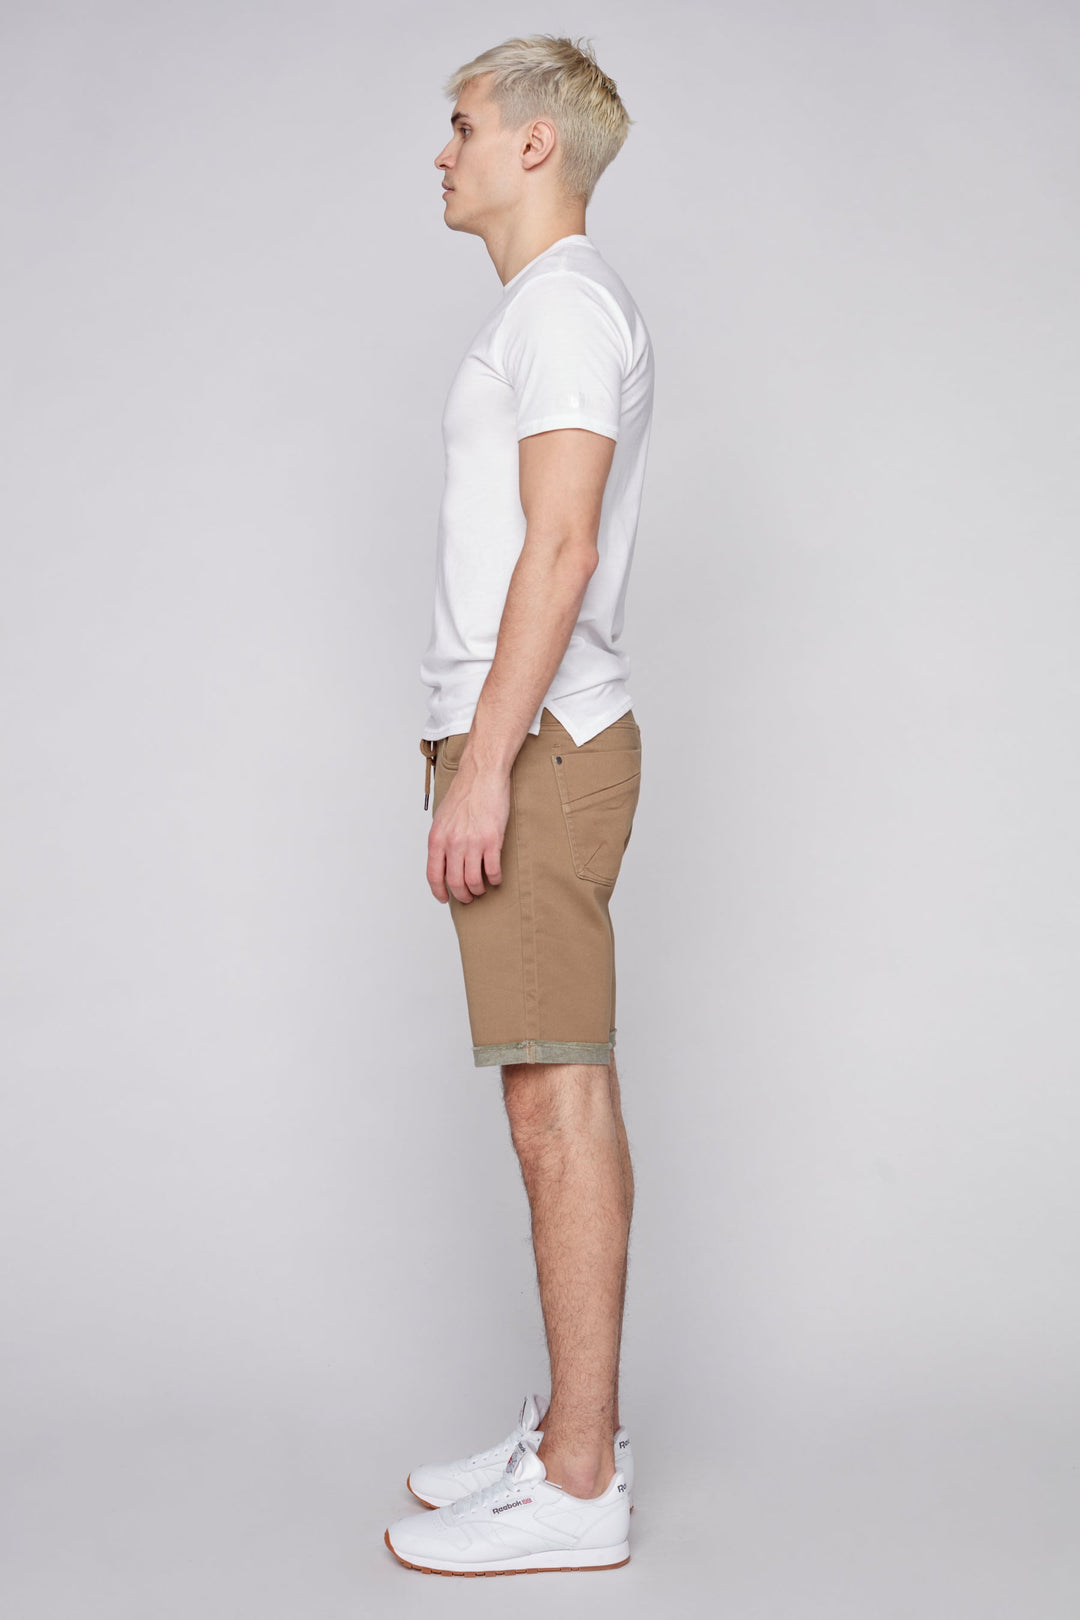 LENNON - Mens Rolled Up Shorts - Beige